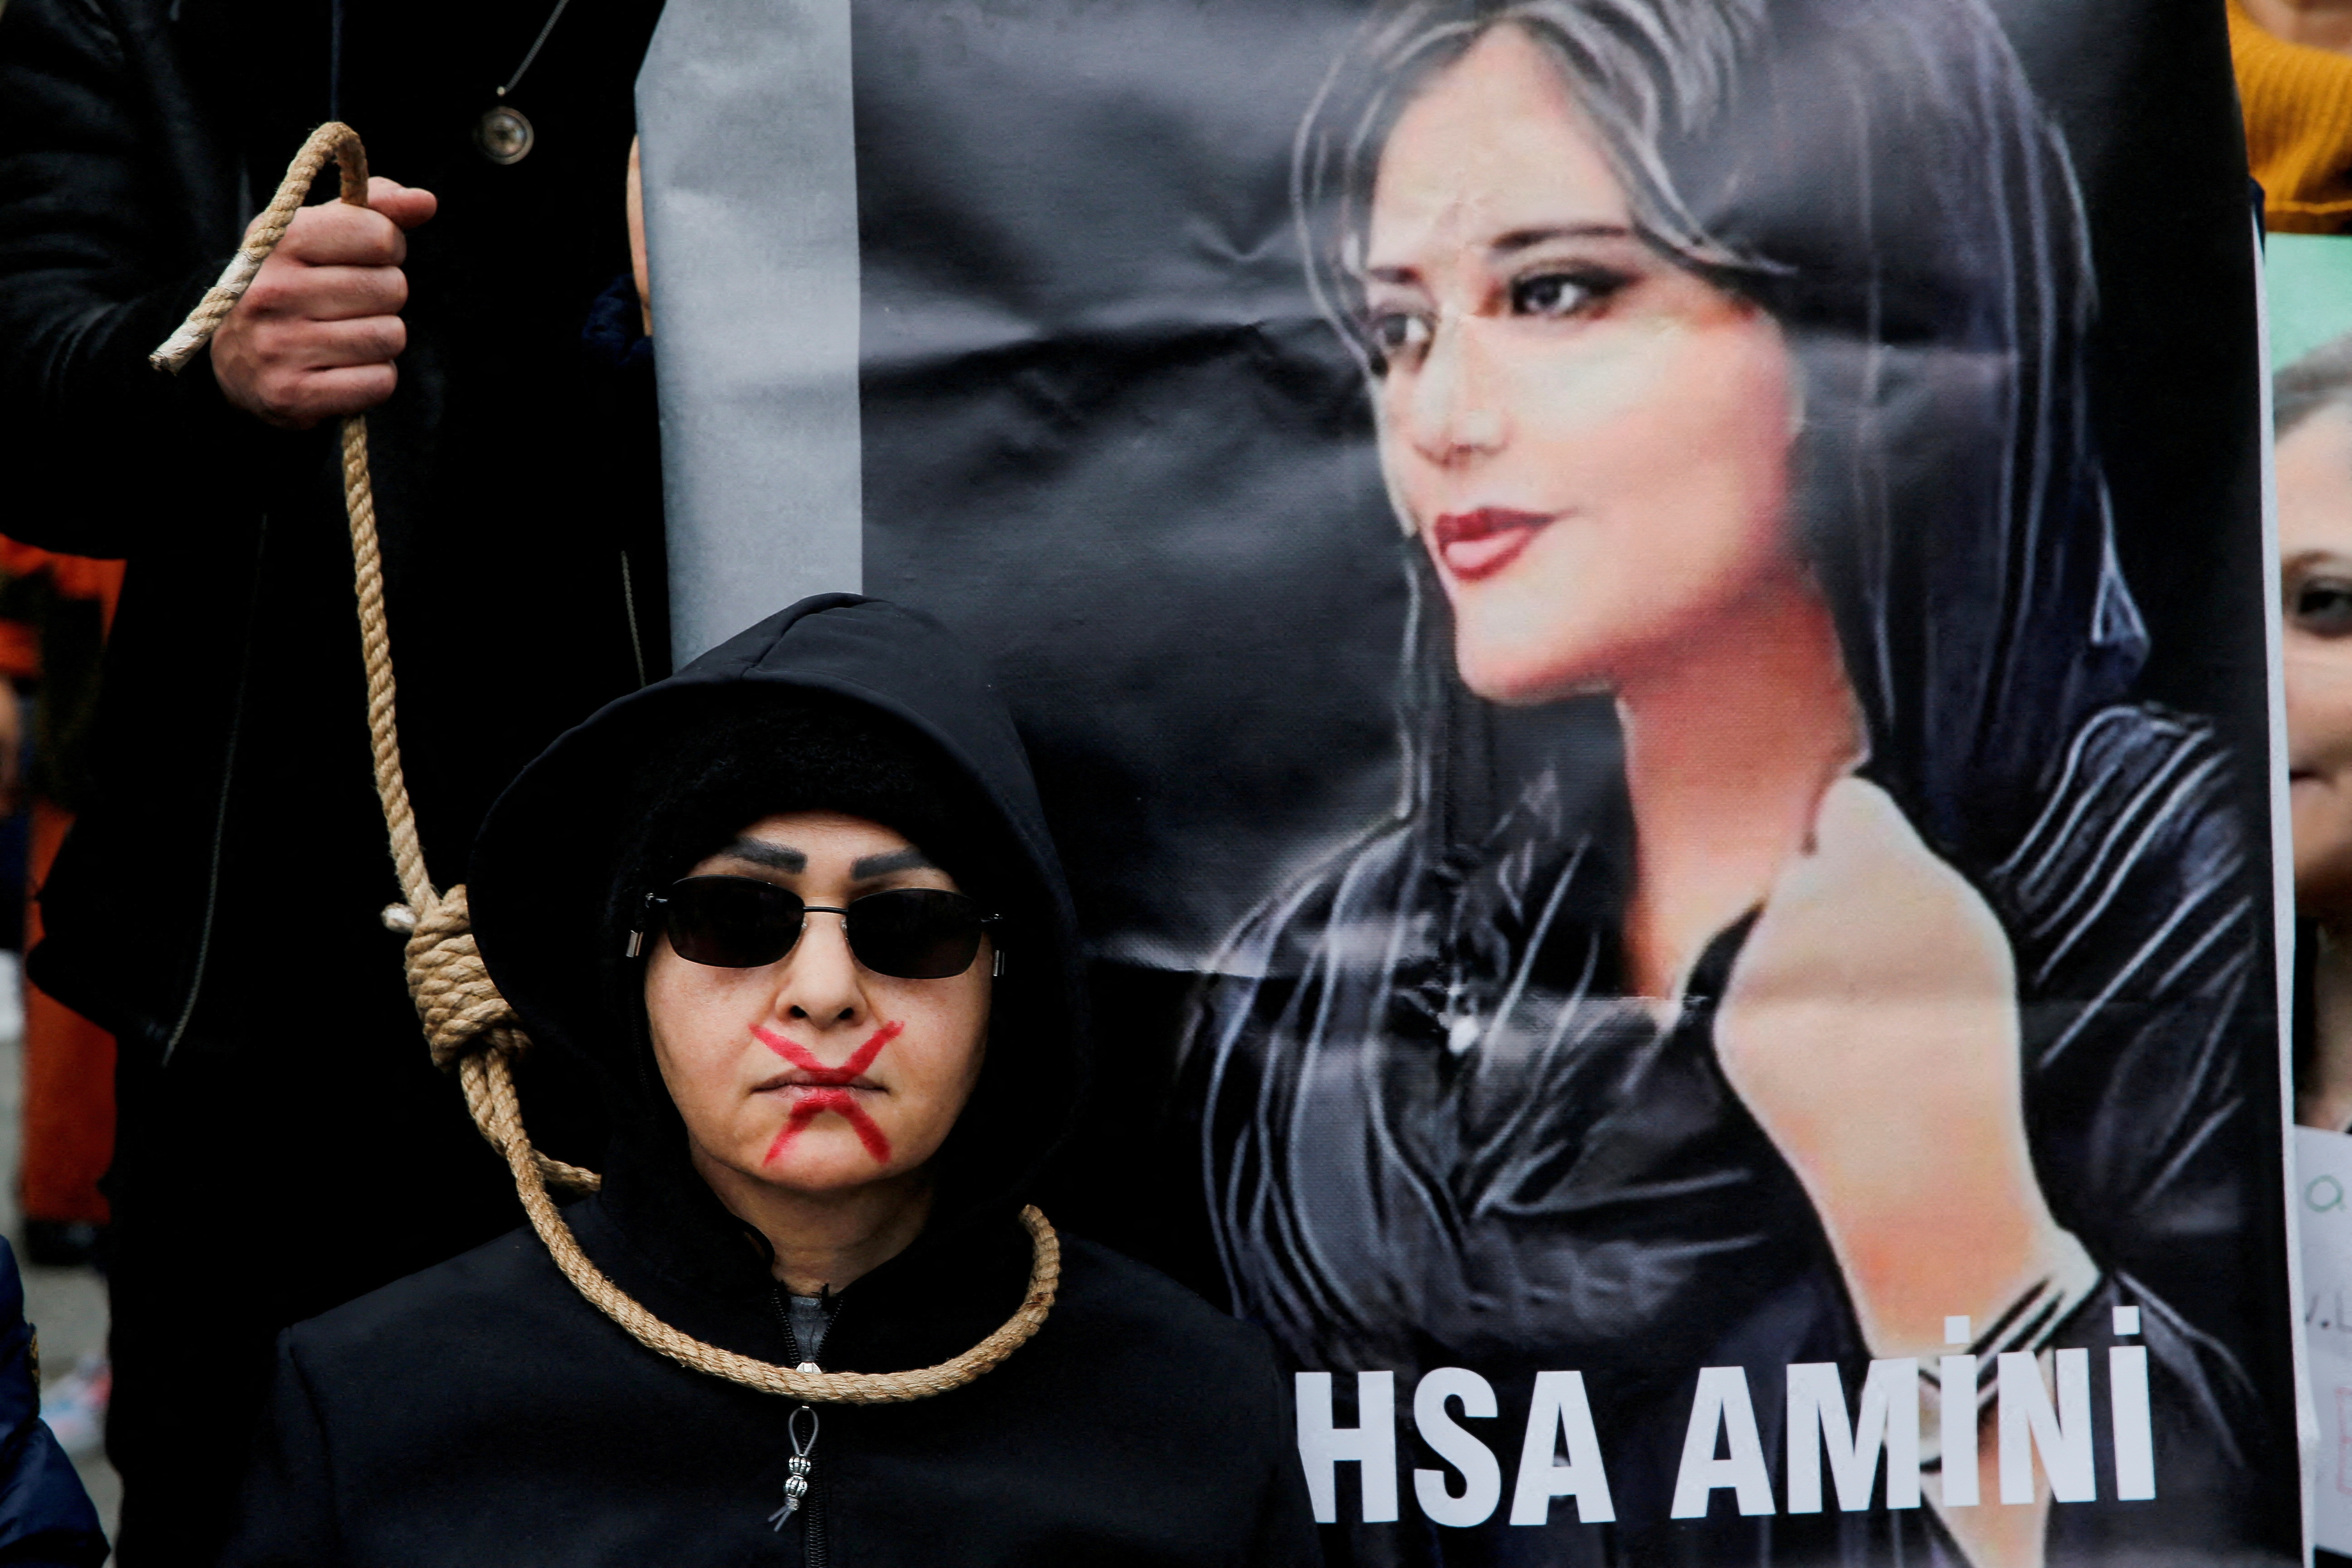 Protesta contra el régimen islámico en Irán tras la muerte de Mahsa Amini en Estambul